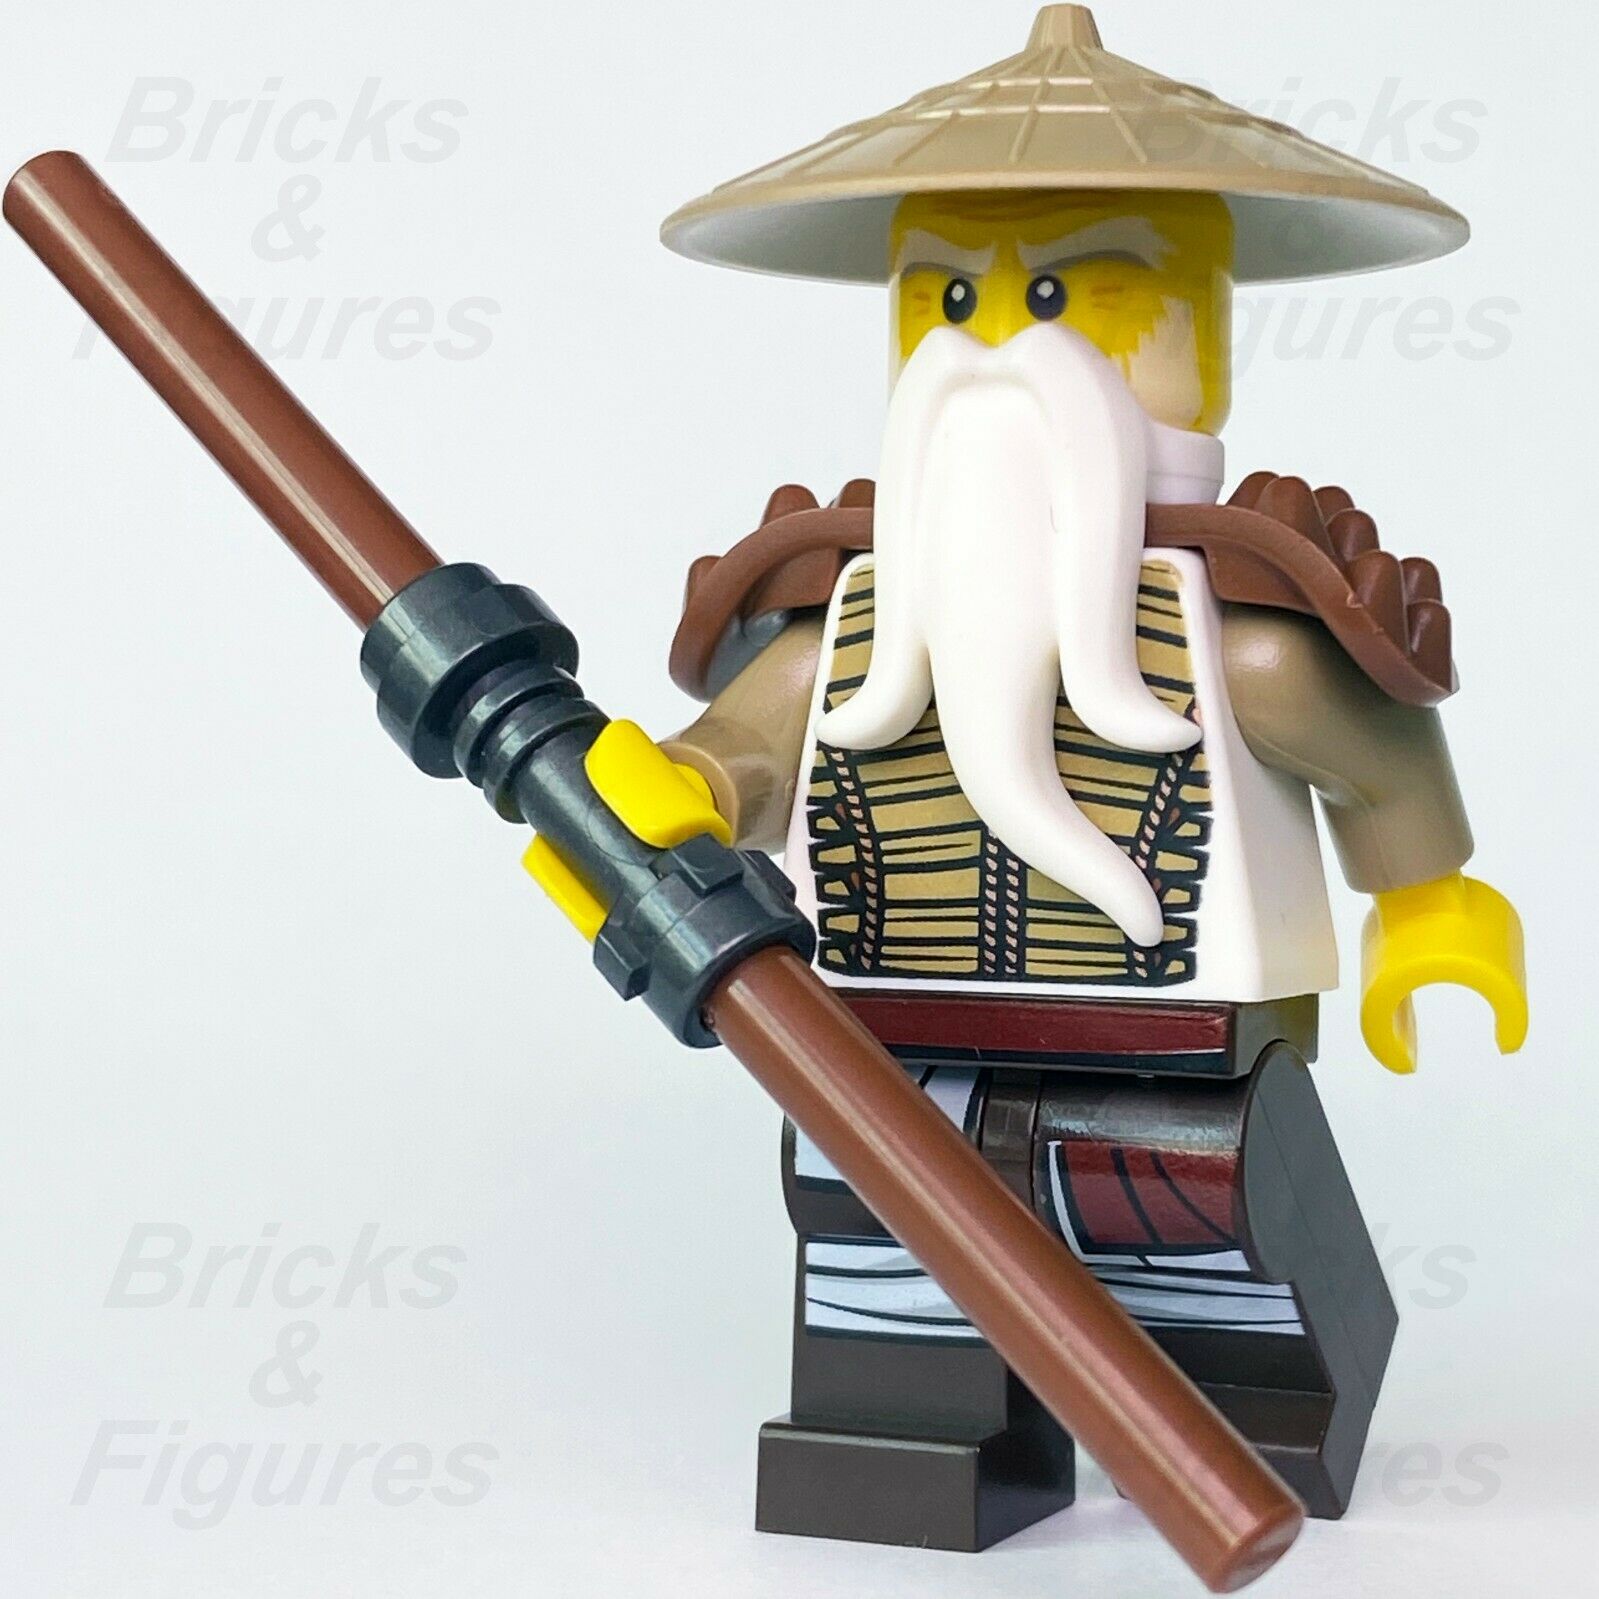 New Ninjago LEGO Hero Wu Ninja Master of the Mountain Minifigure 71718 - Bricks & Figures